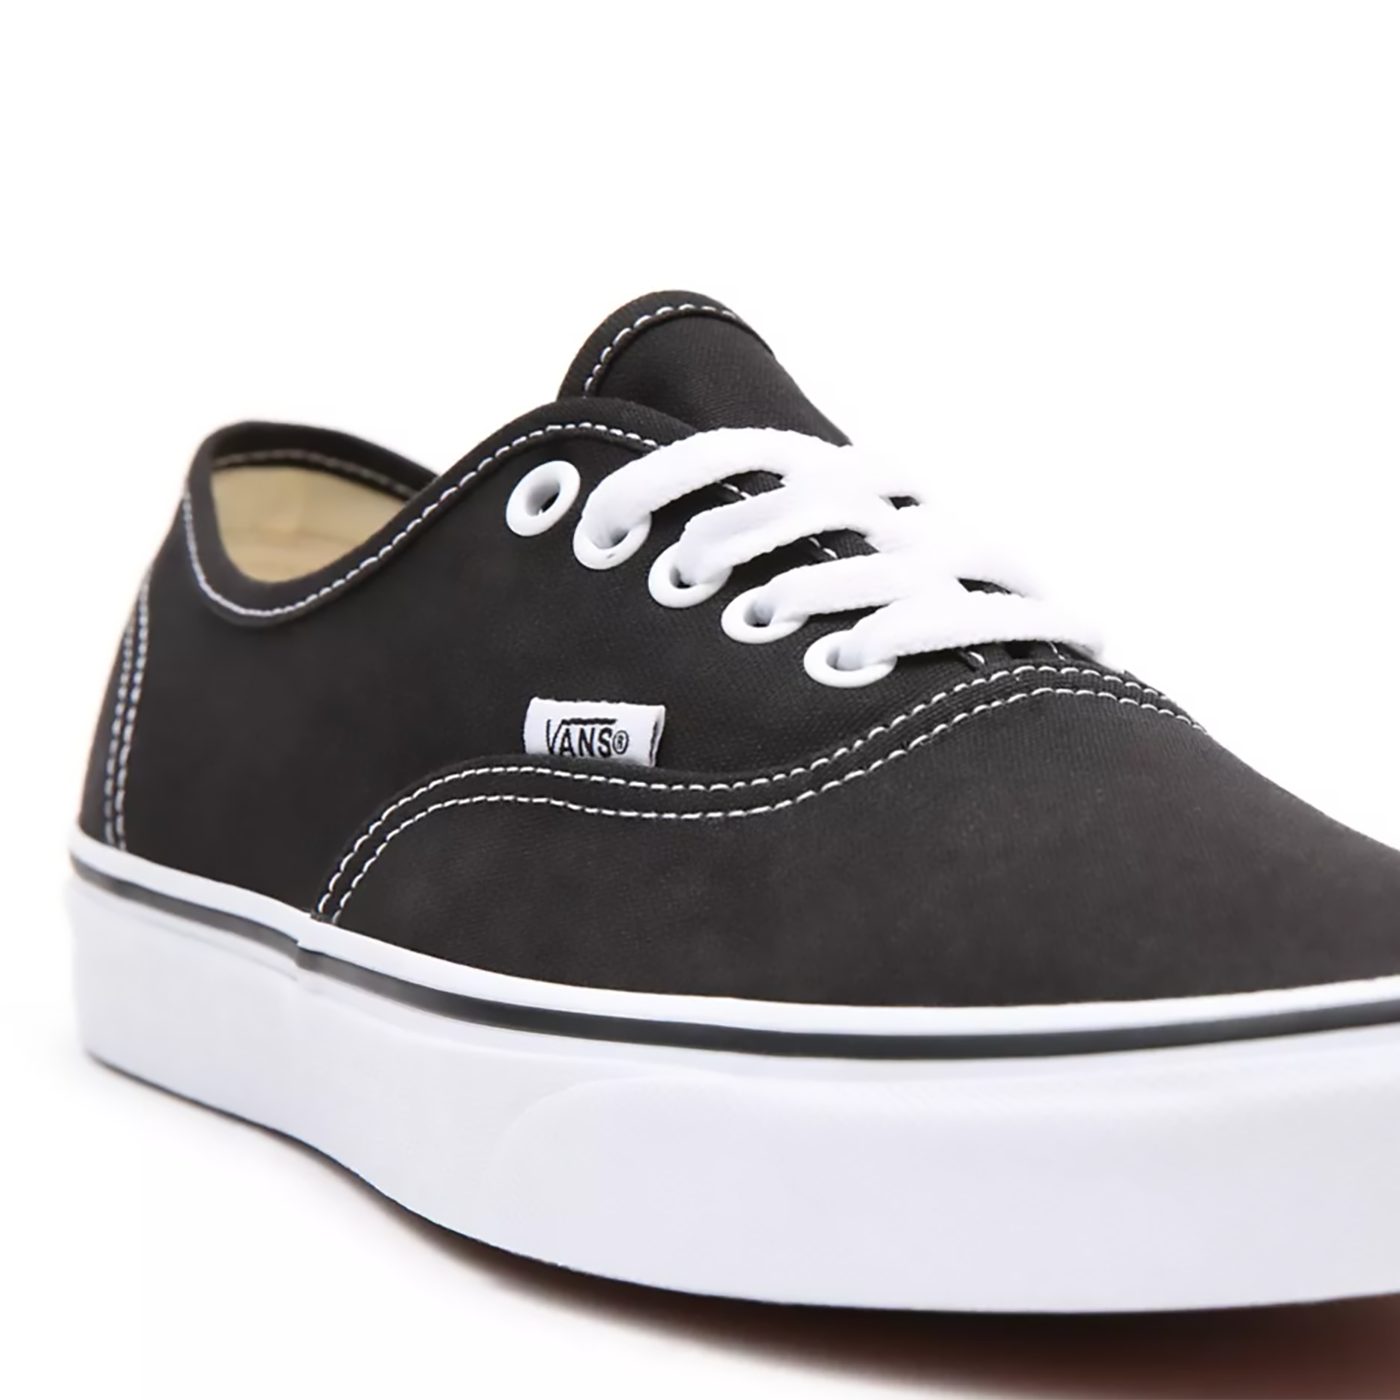 Vans Authentic Shoes - Black/White | VN000EE3BLK | MODA3 - MODA3